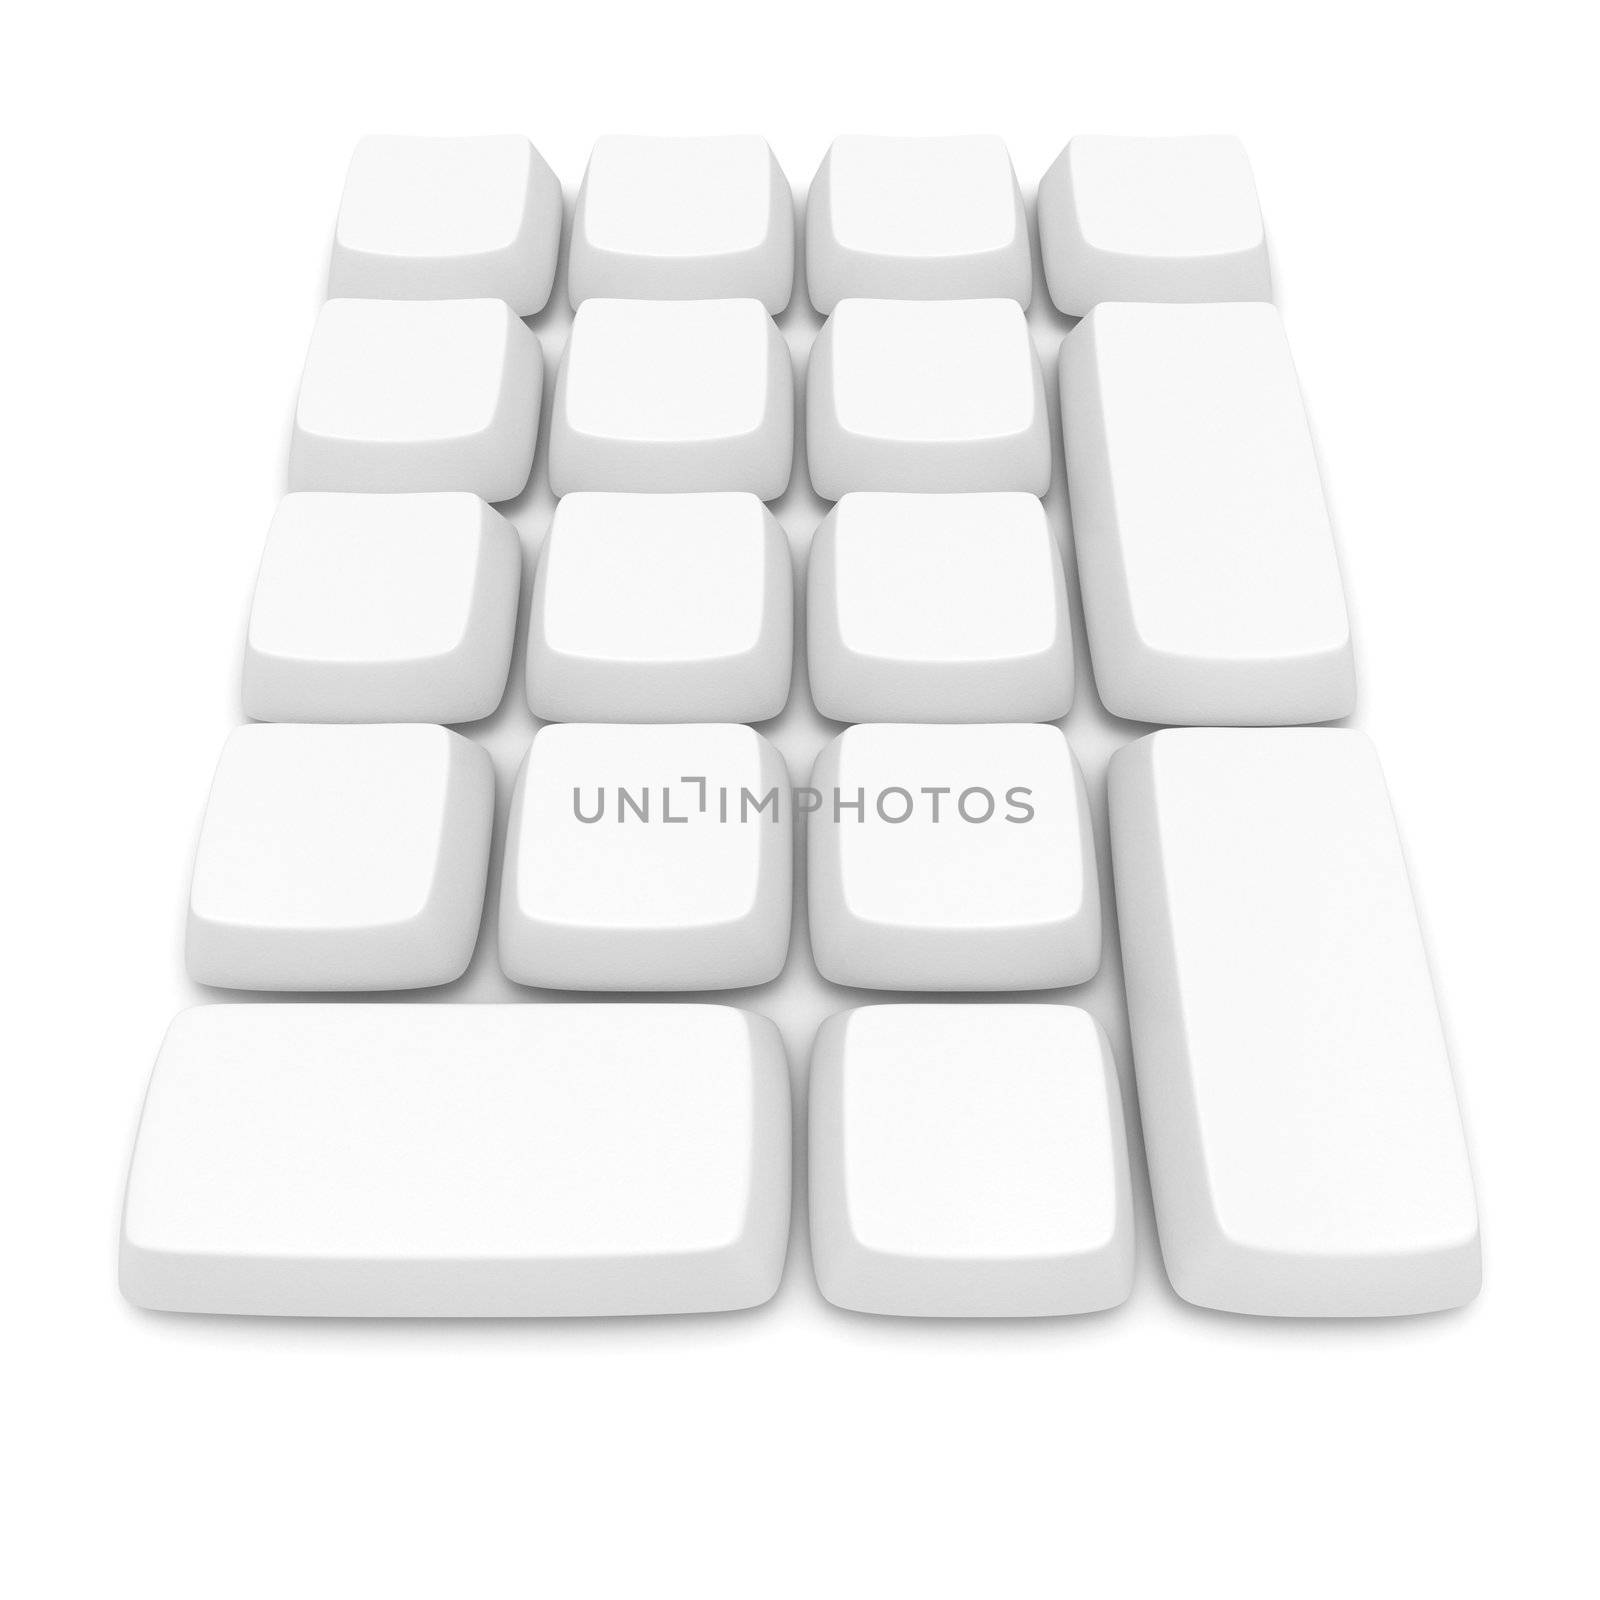 White computer keys without symbols